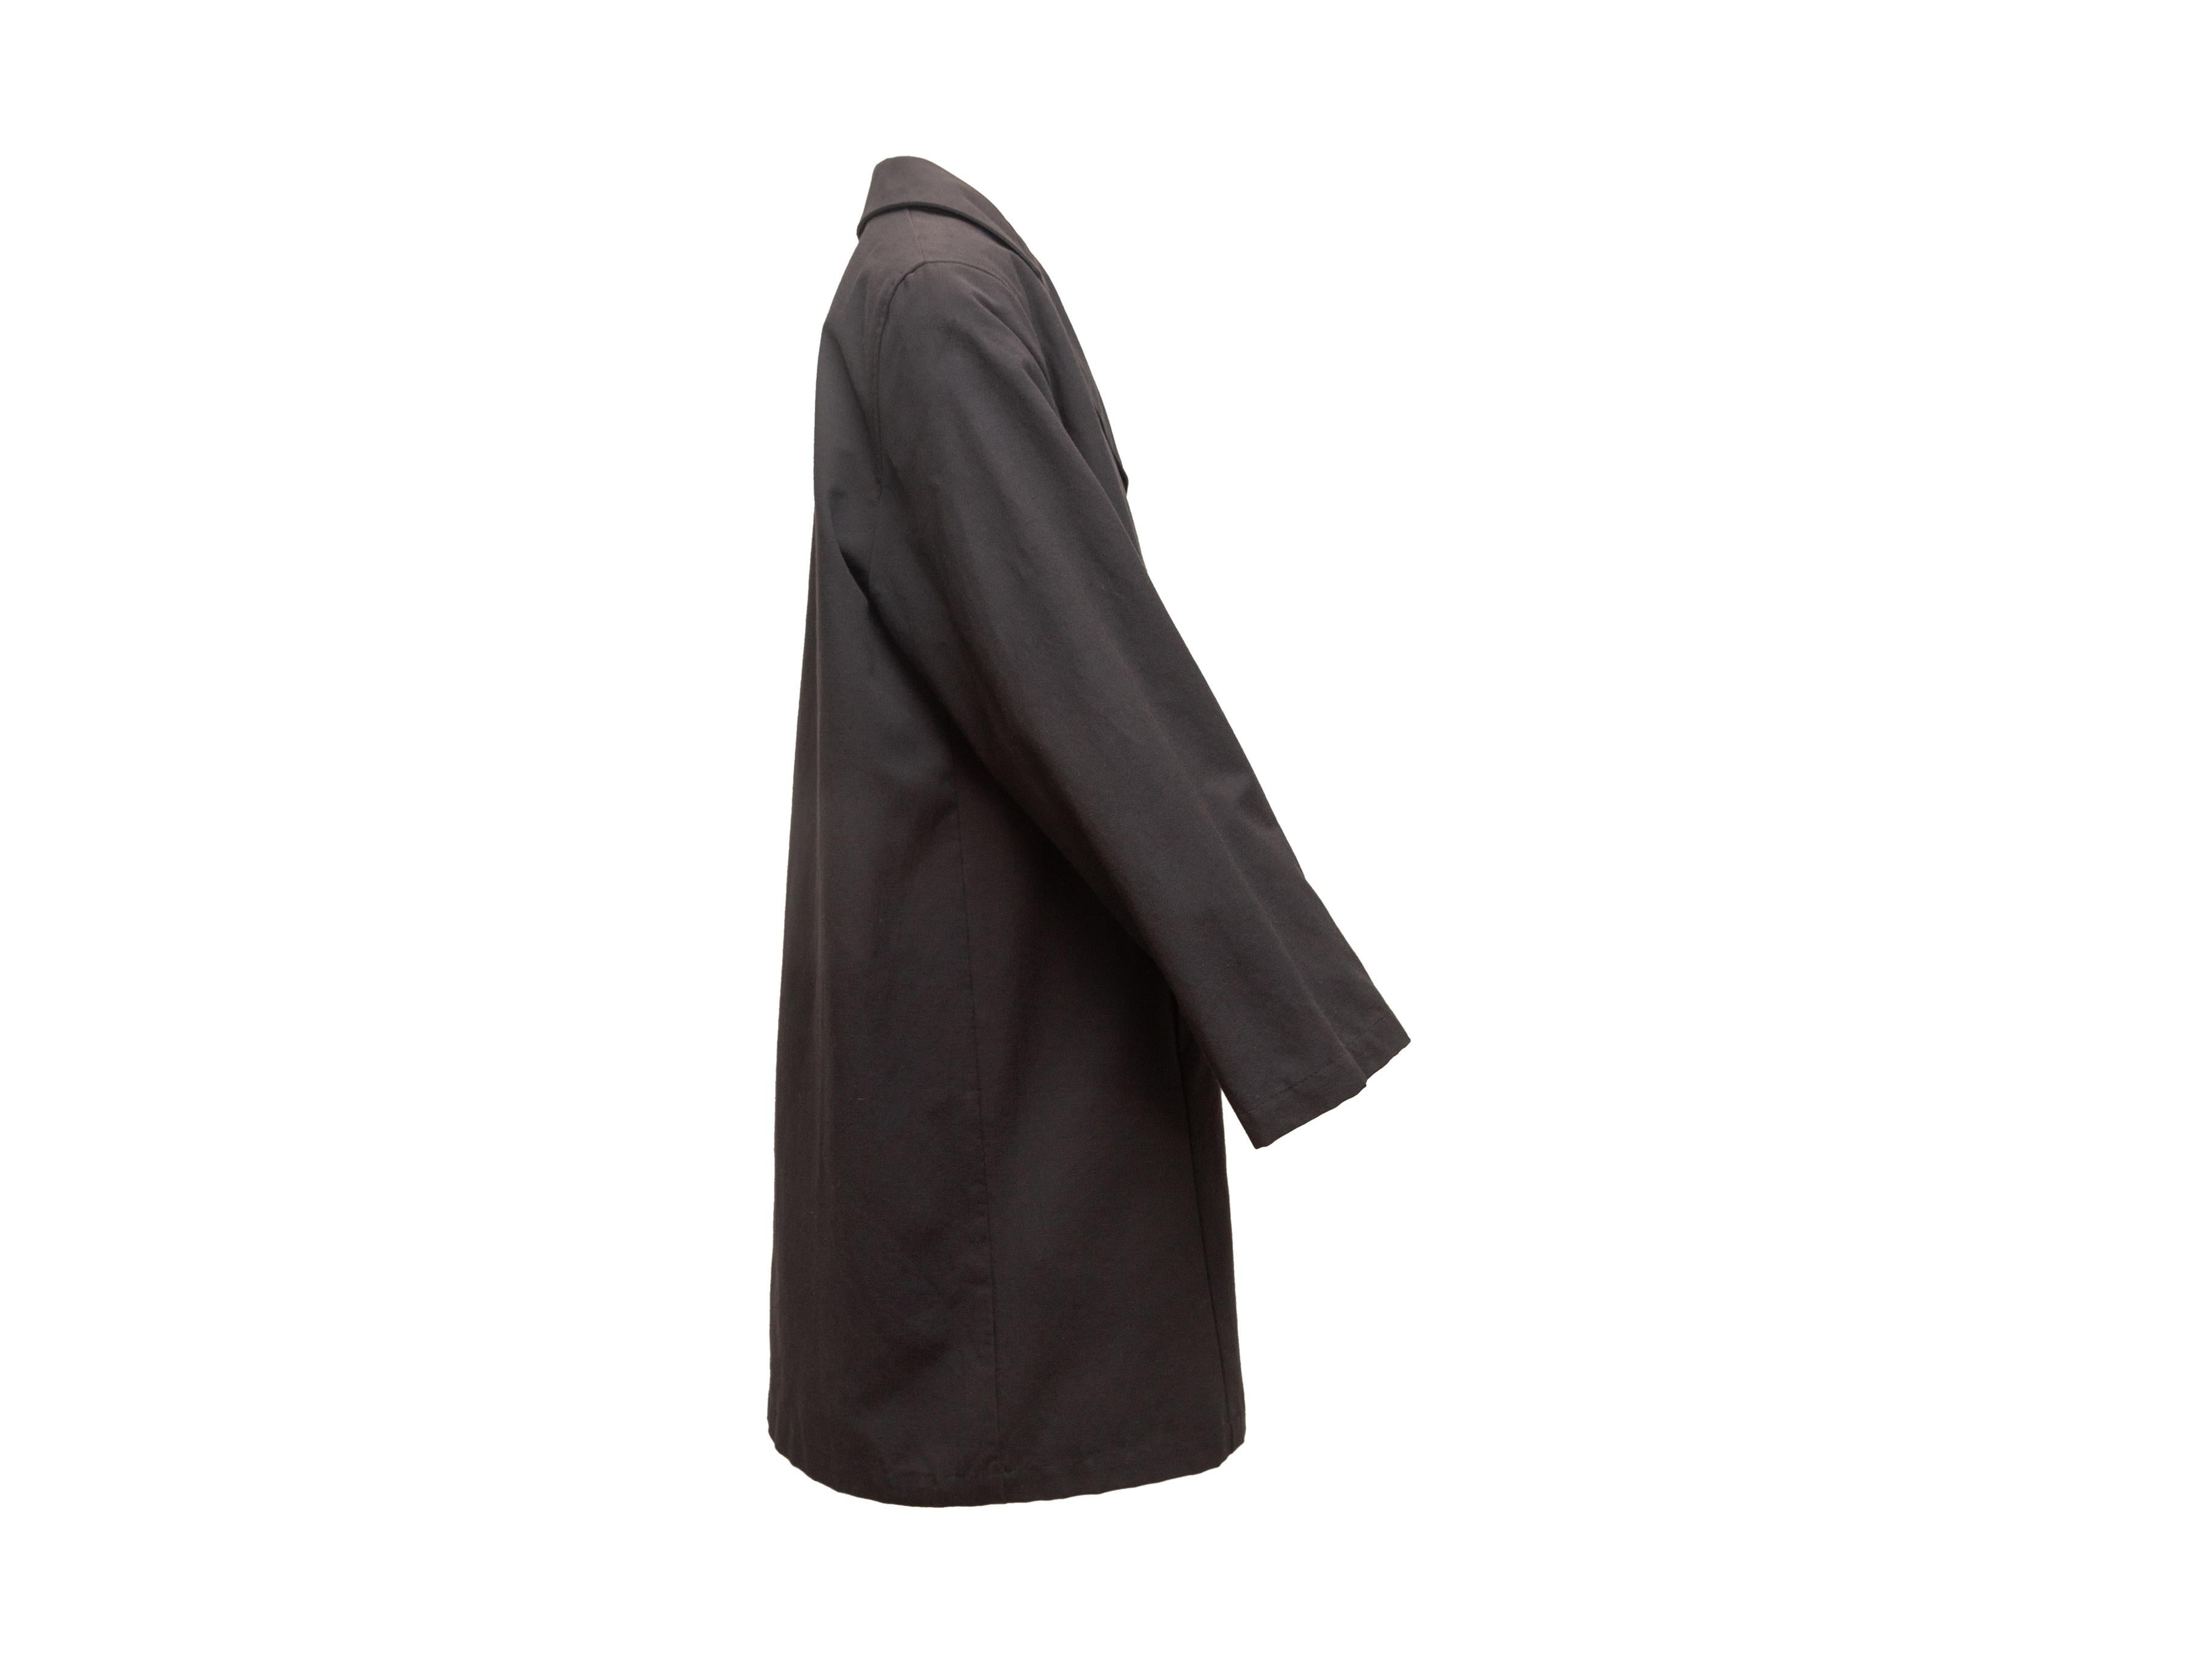 Product details: Black long coat by Marina Rinaldi. Notched lapel. Dual hip pockets. Concealed front closures. Designer size 19. 40